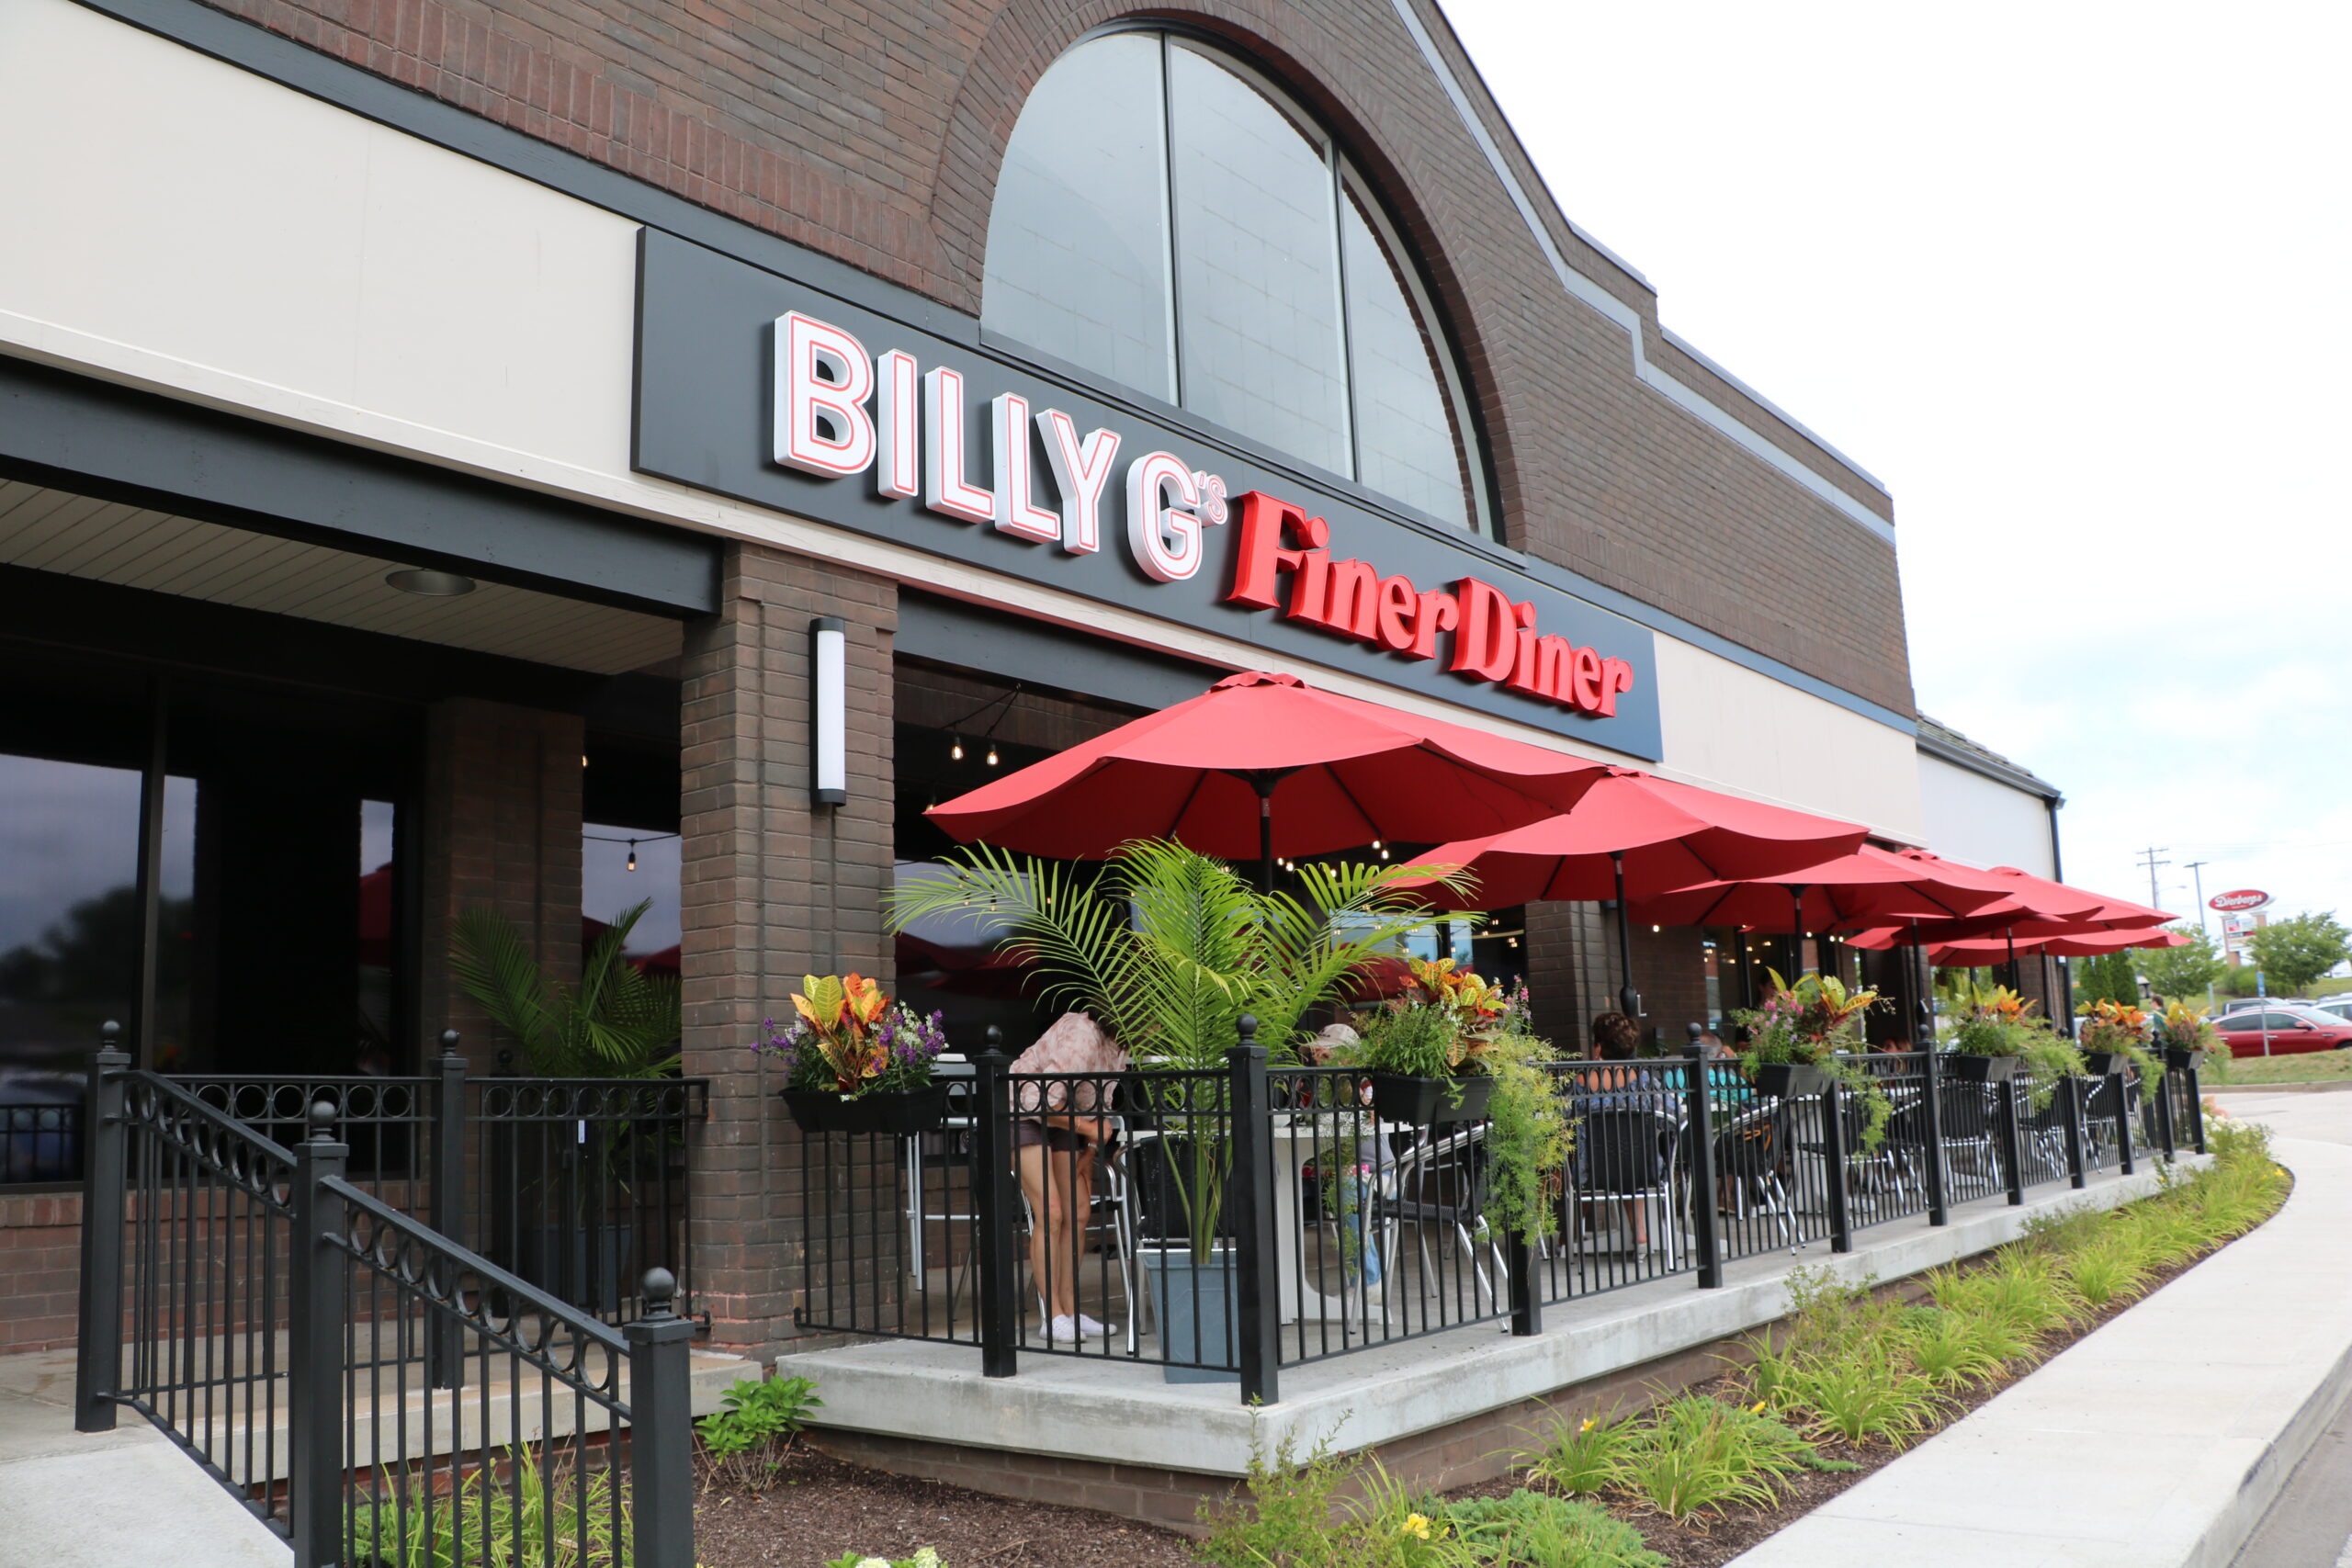 Billy G's Finer Diner exterior patio